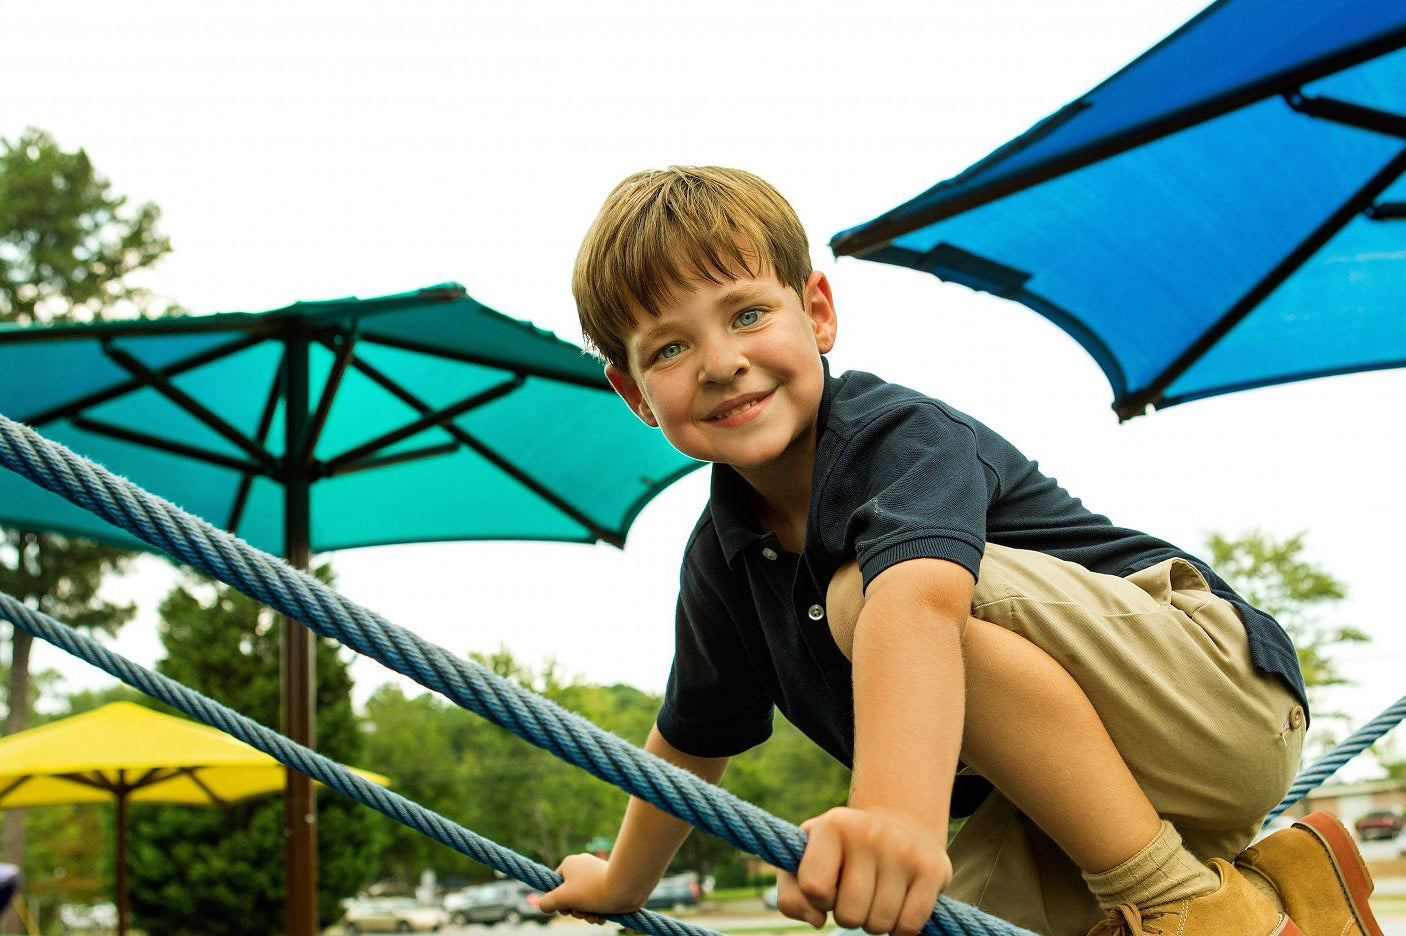 Child Climbing on Playground with Playground Shades